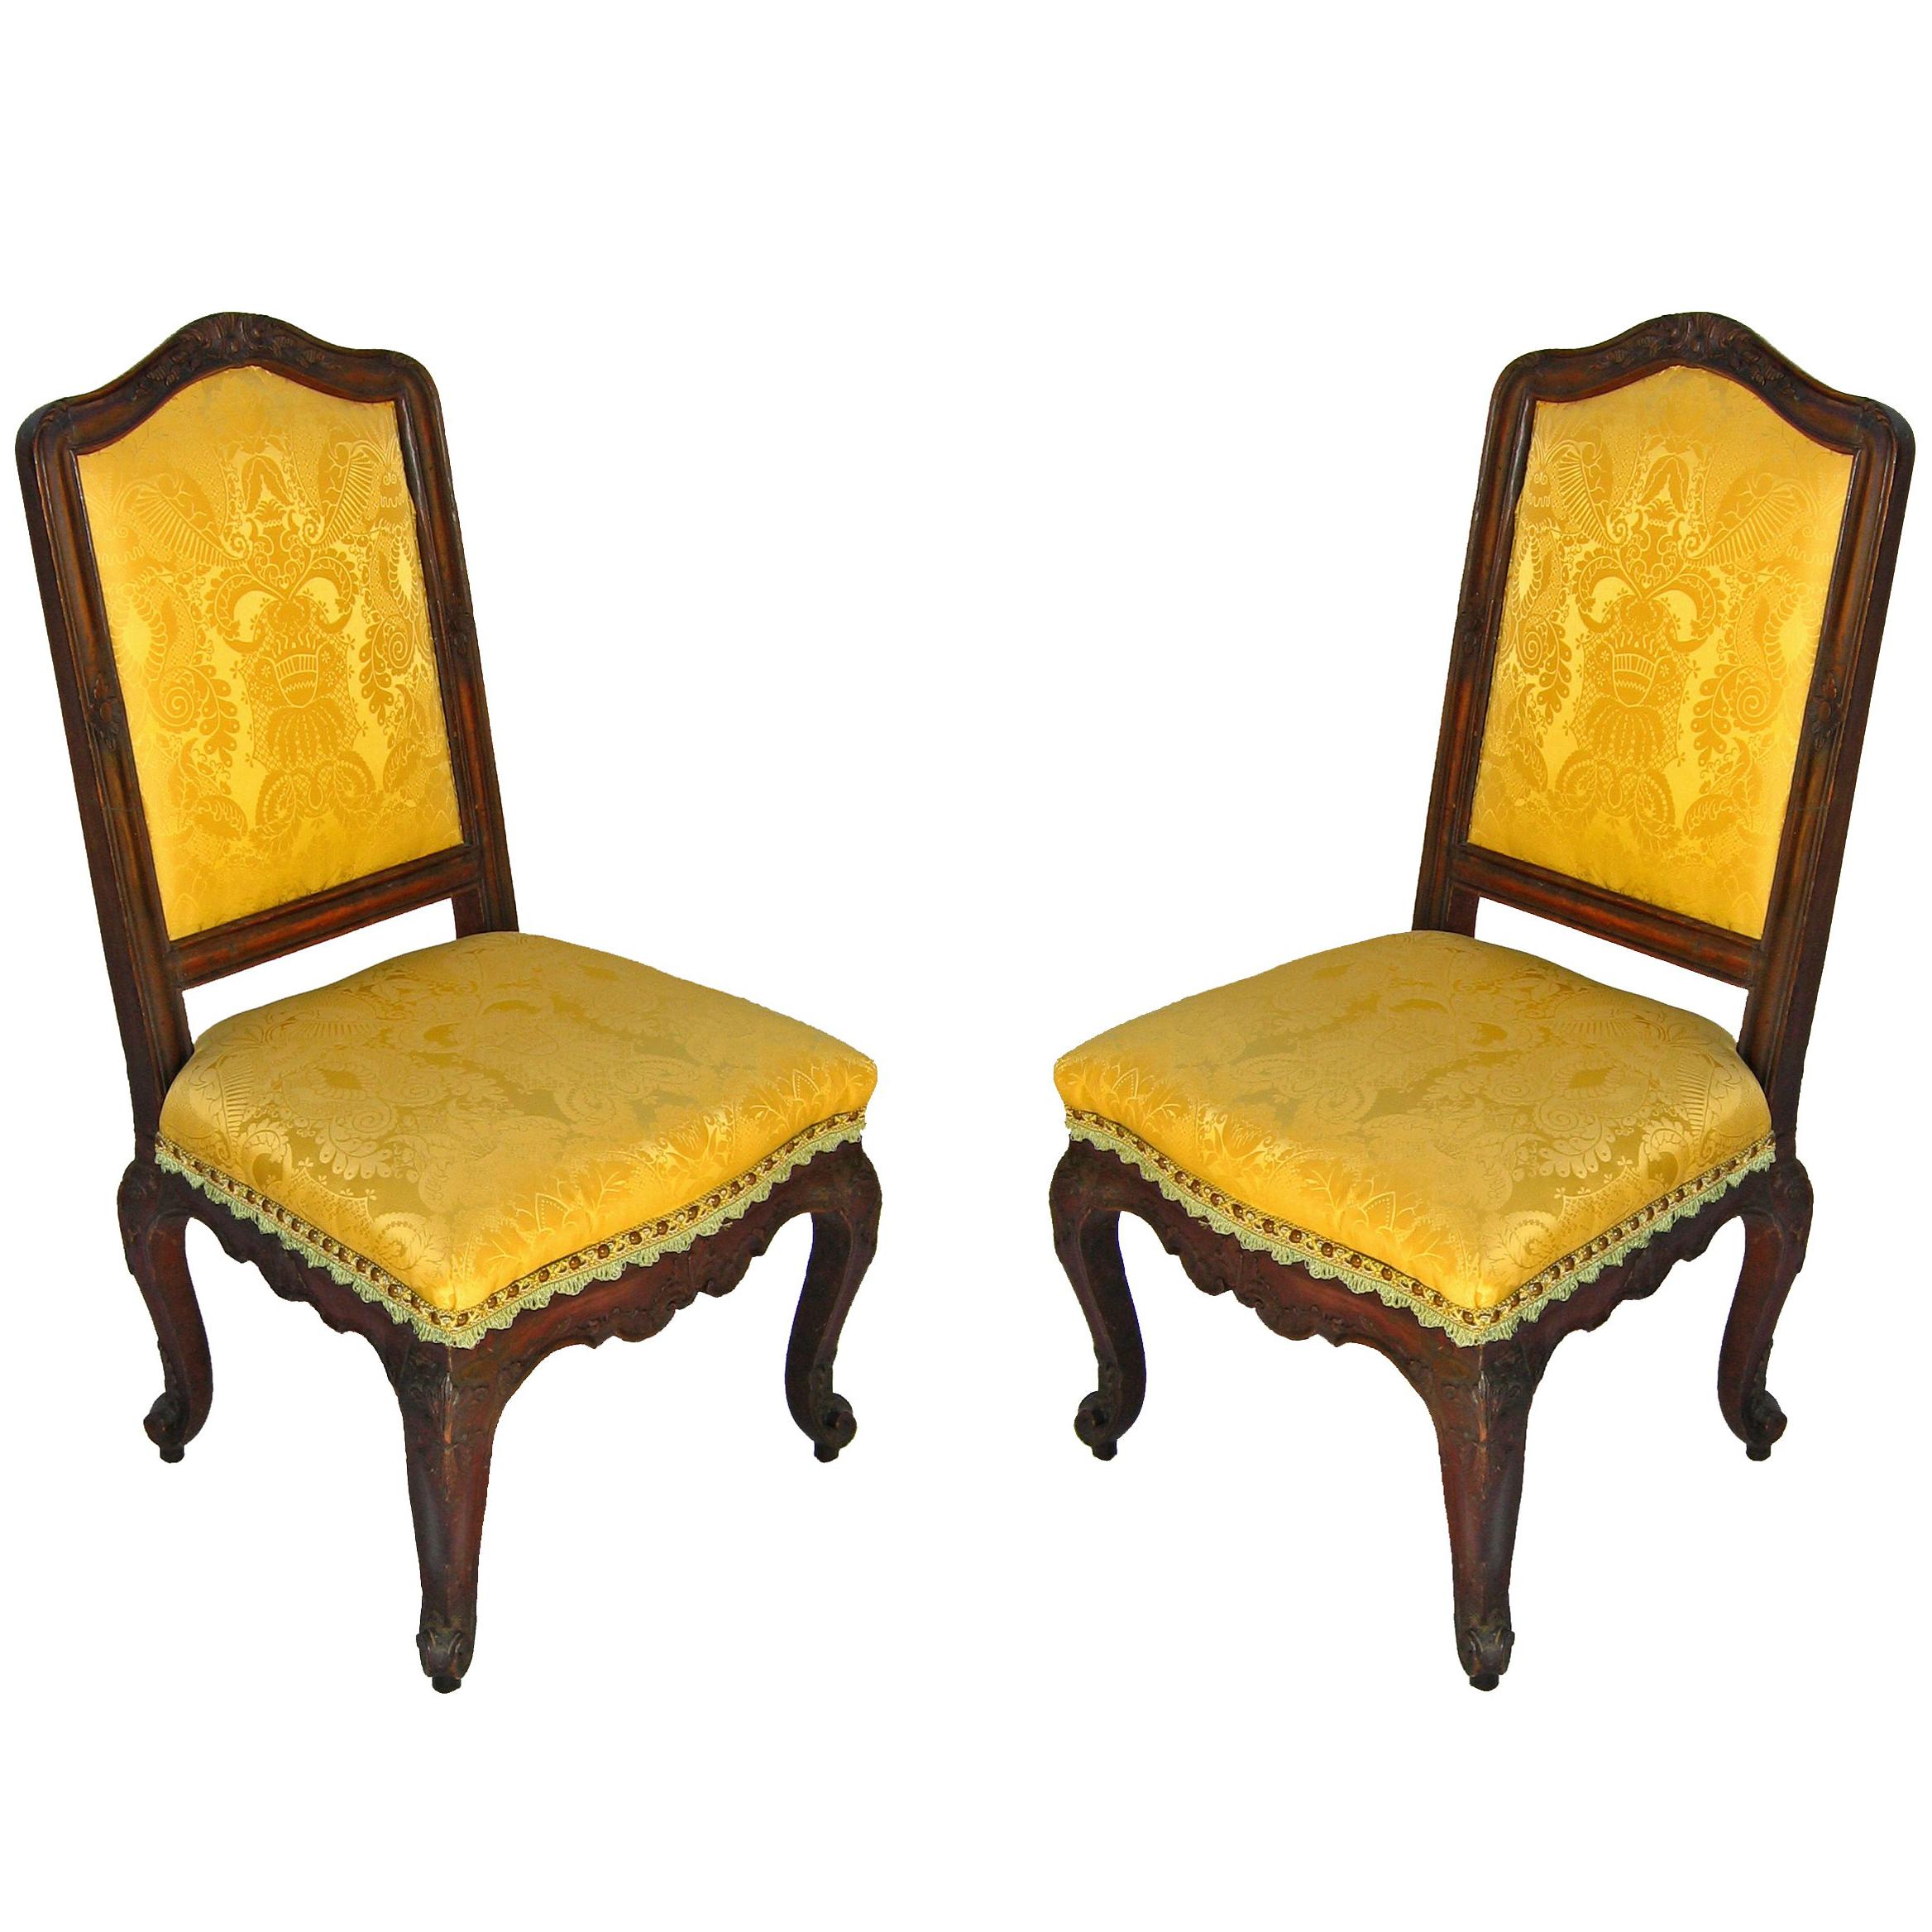 Pair Regence Walnut Side Chairs, c1725